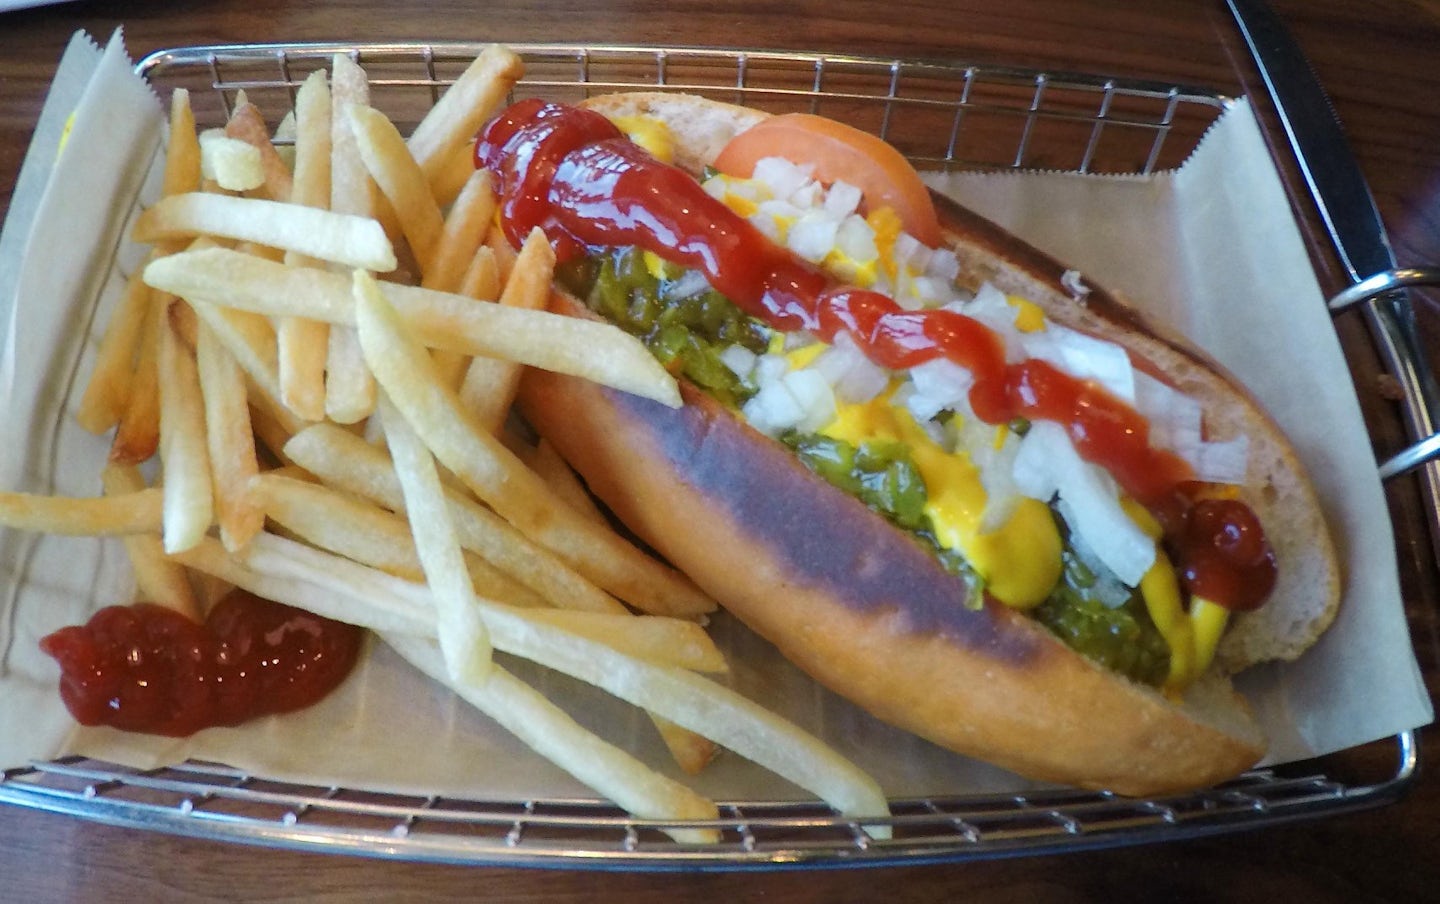 Great hot dog in O’Sheehans